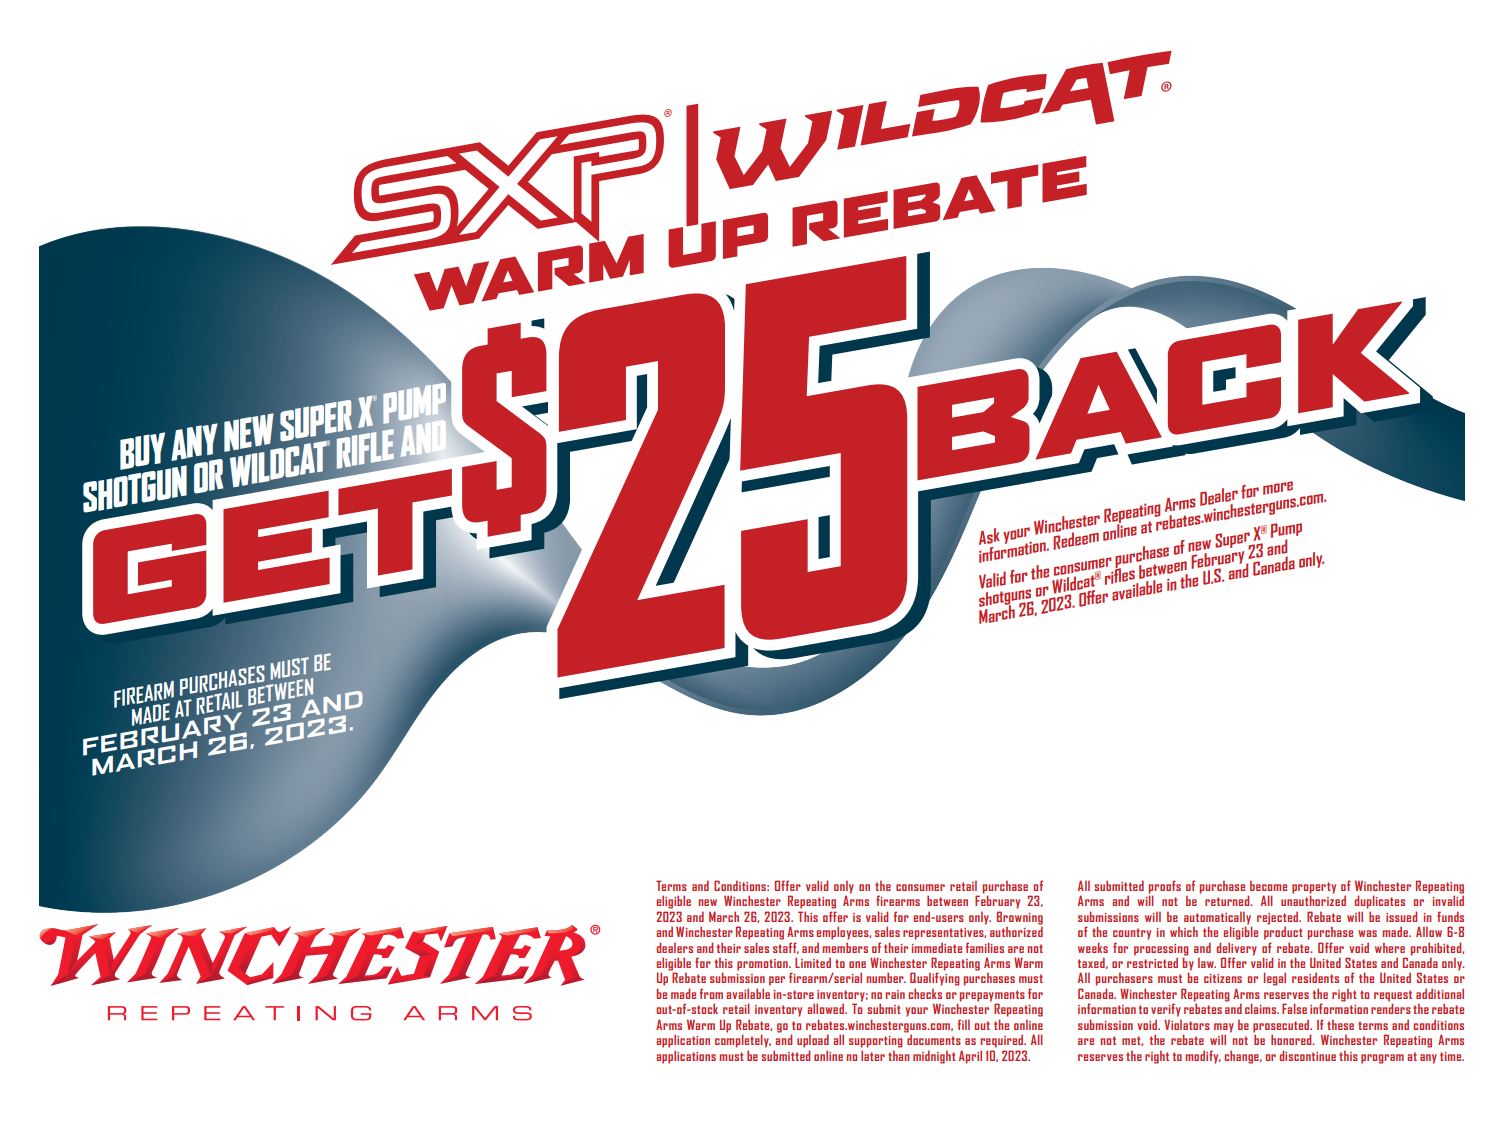 Winchester SXP/Wildcat Warm Up Rebate